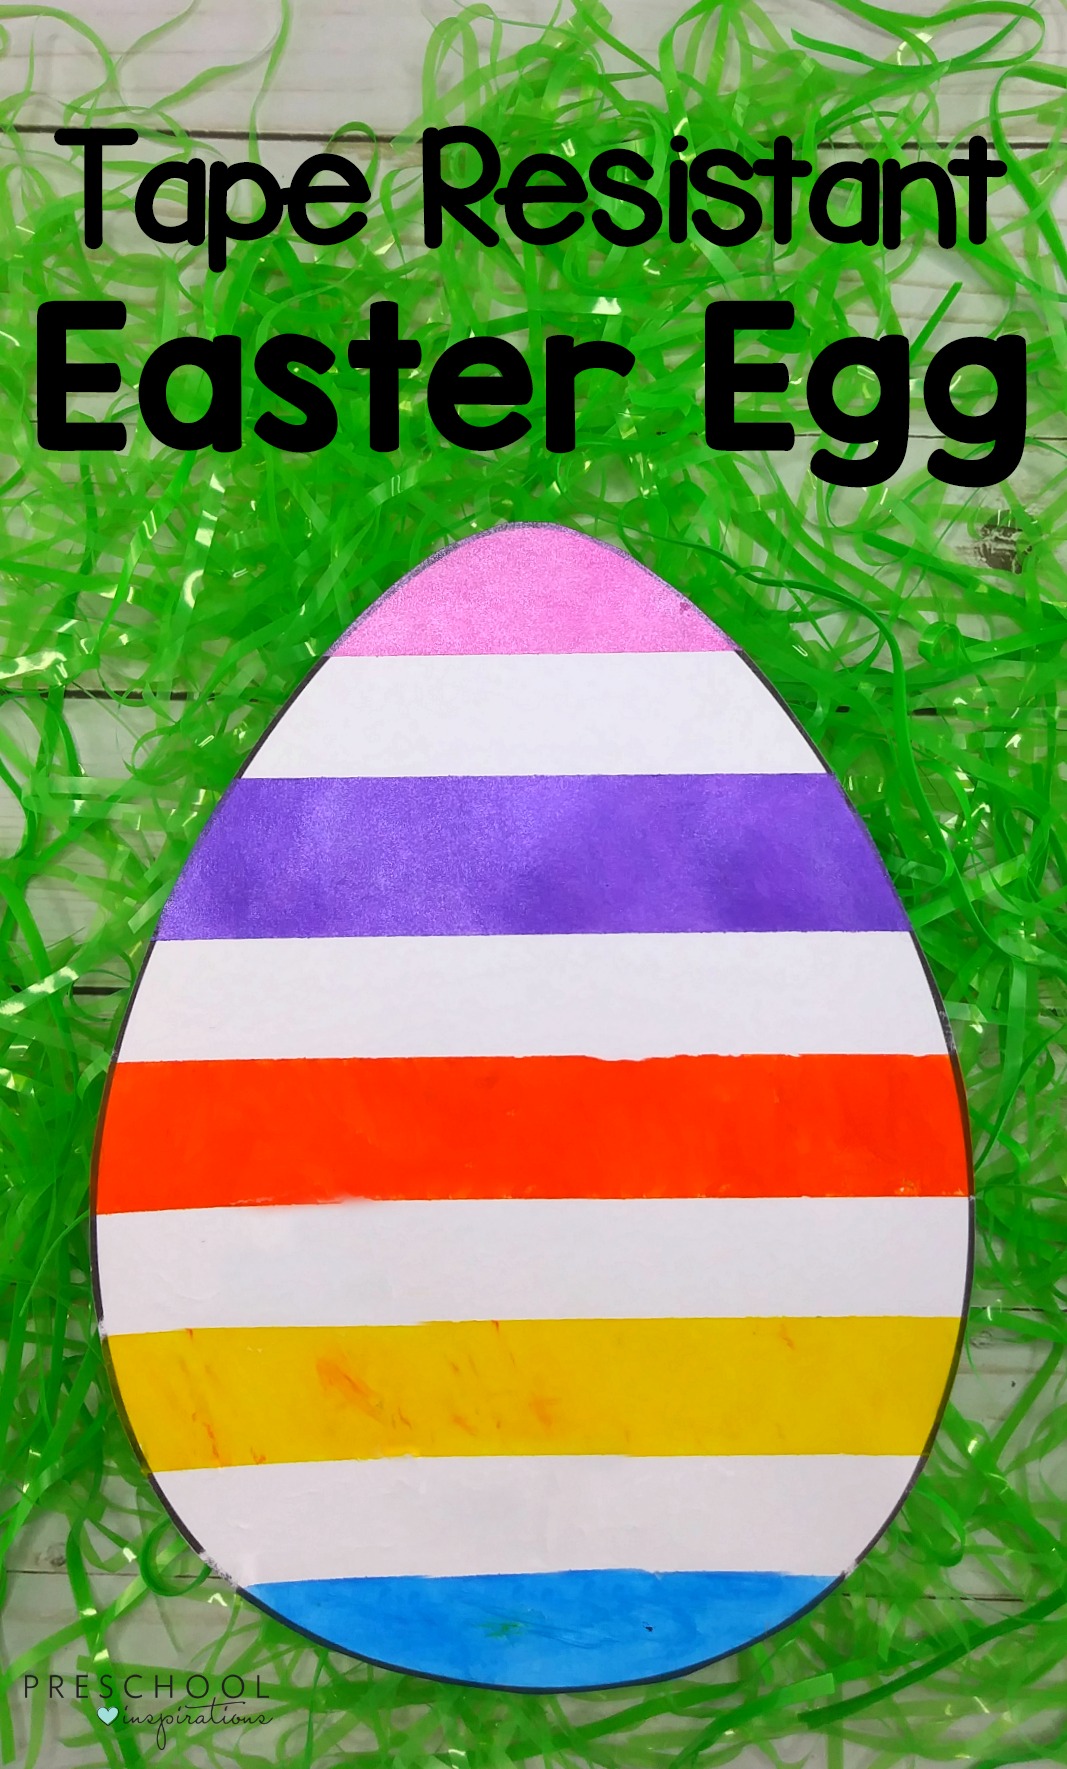 Tape resist Easter egg art the kids can make themselves